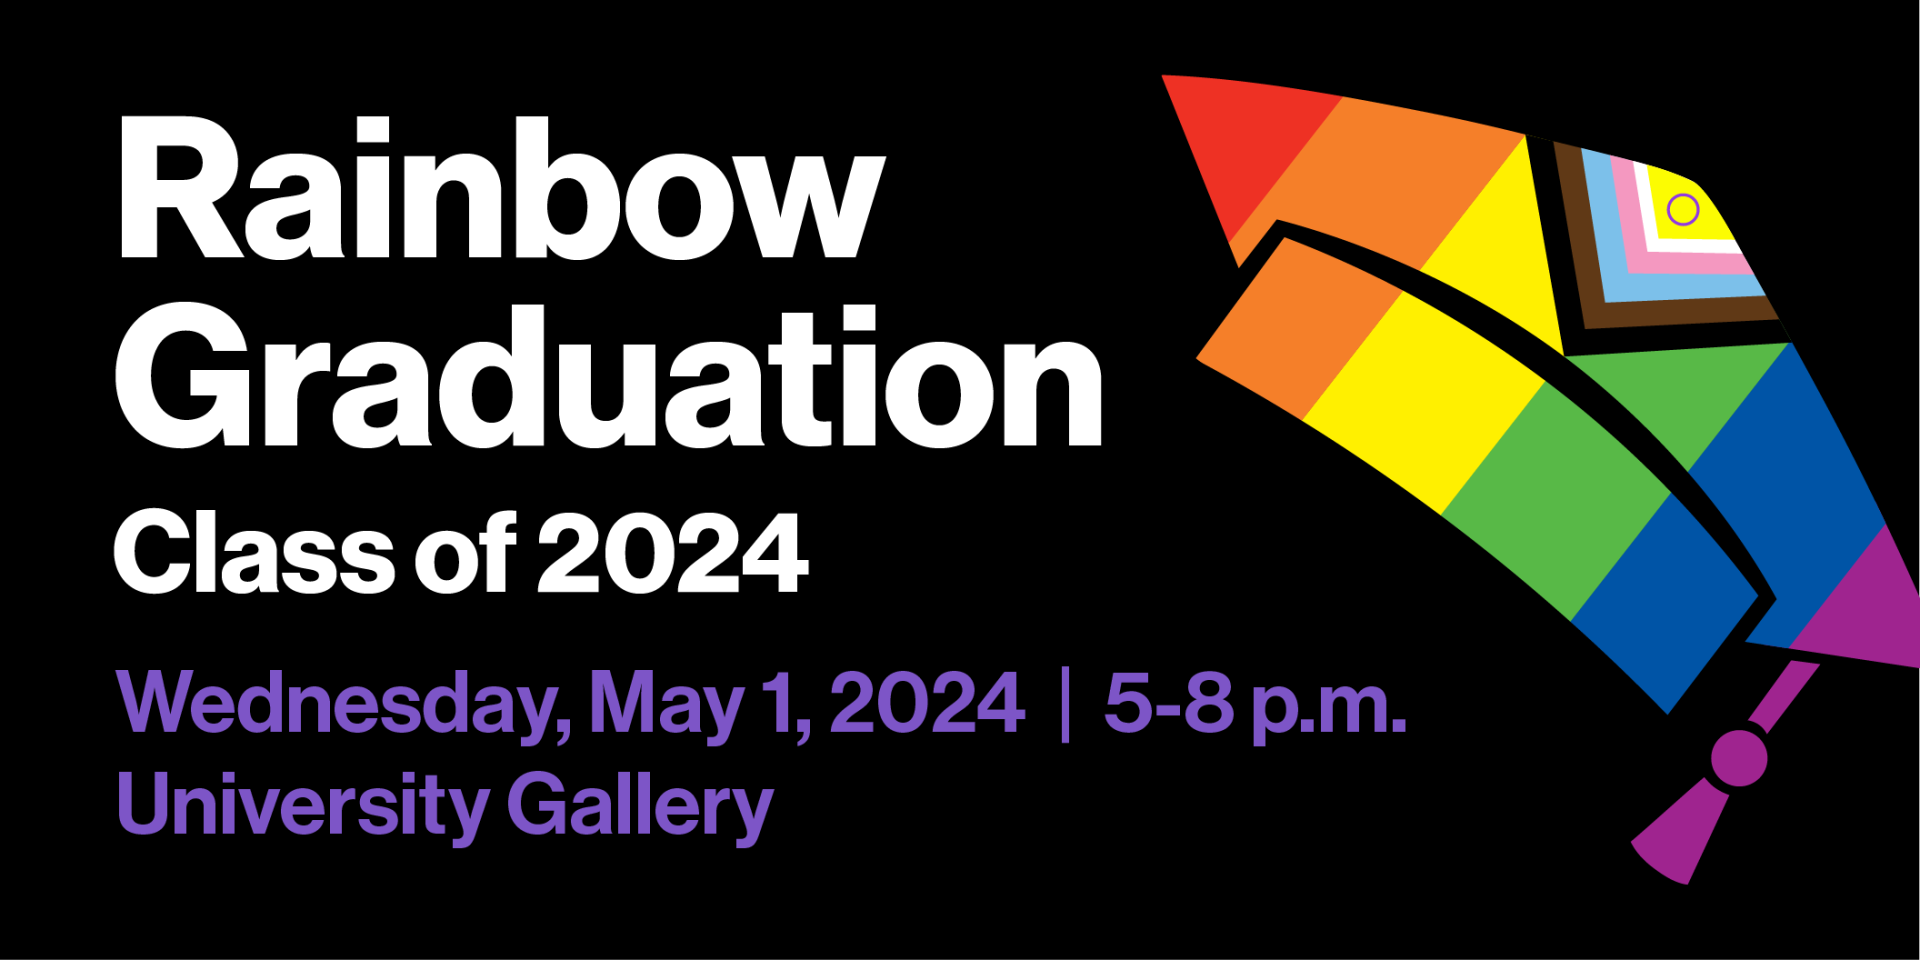 Rainbow Graduation Class of 2024. Wednesday, May 1, 2024. 5-8 p.m. University Gallery